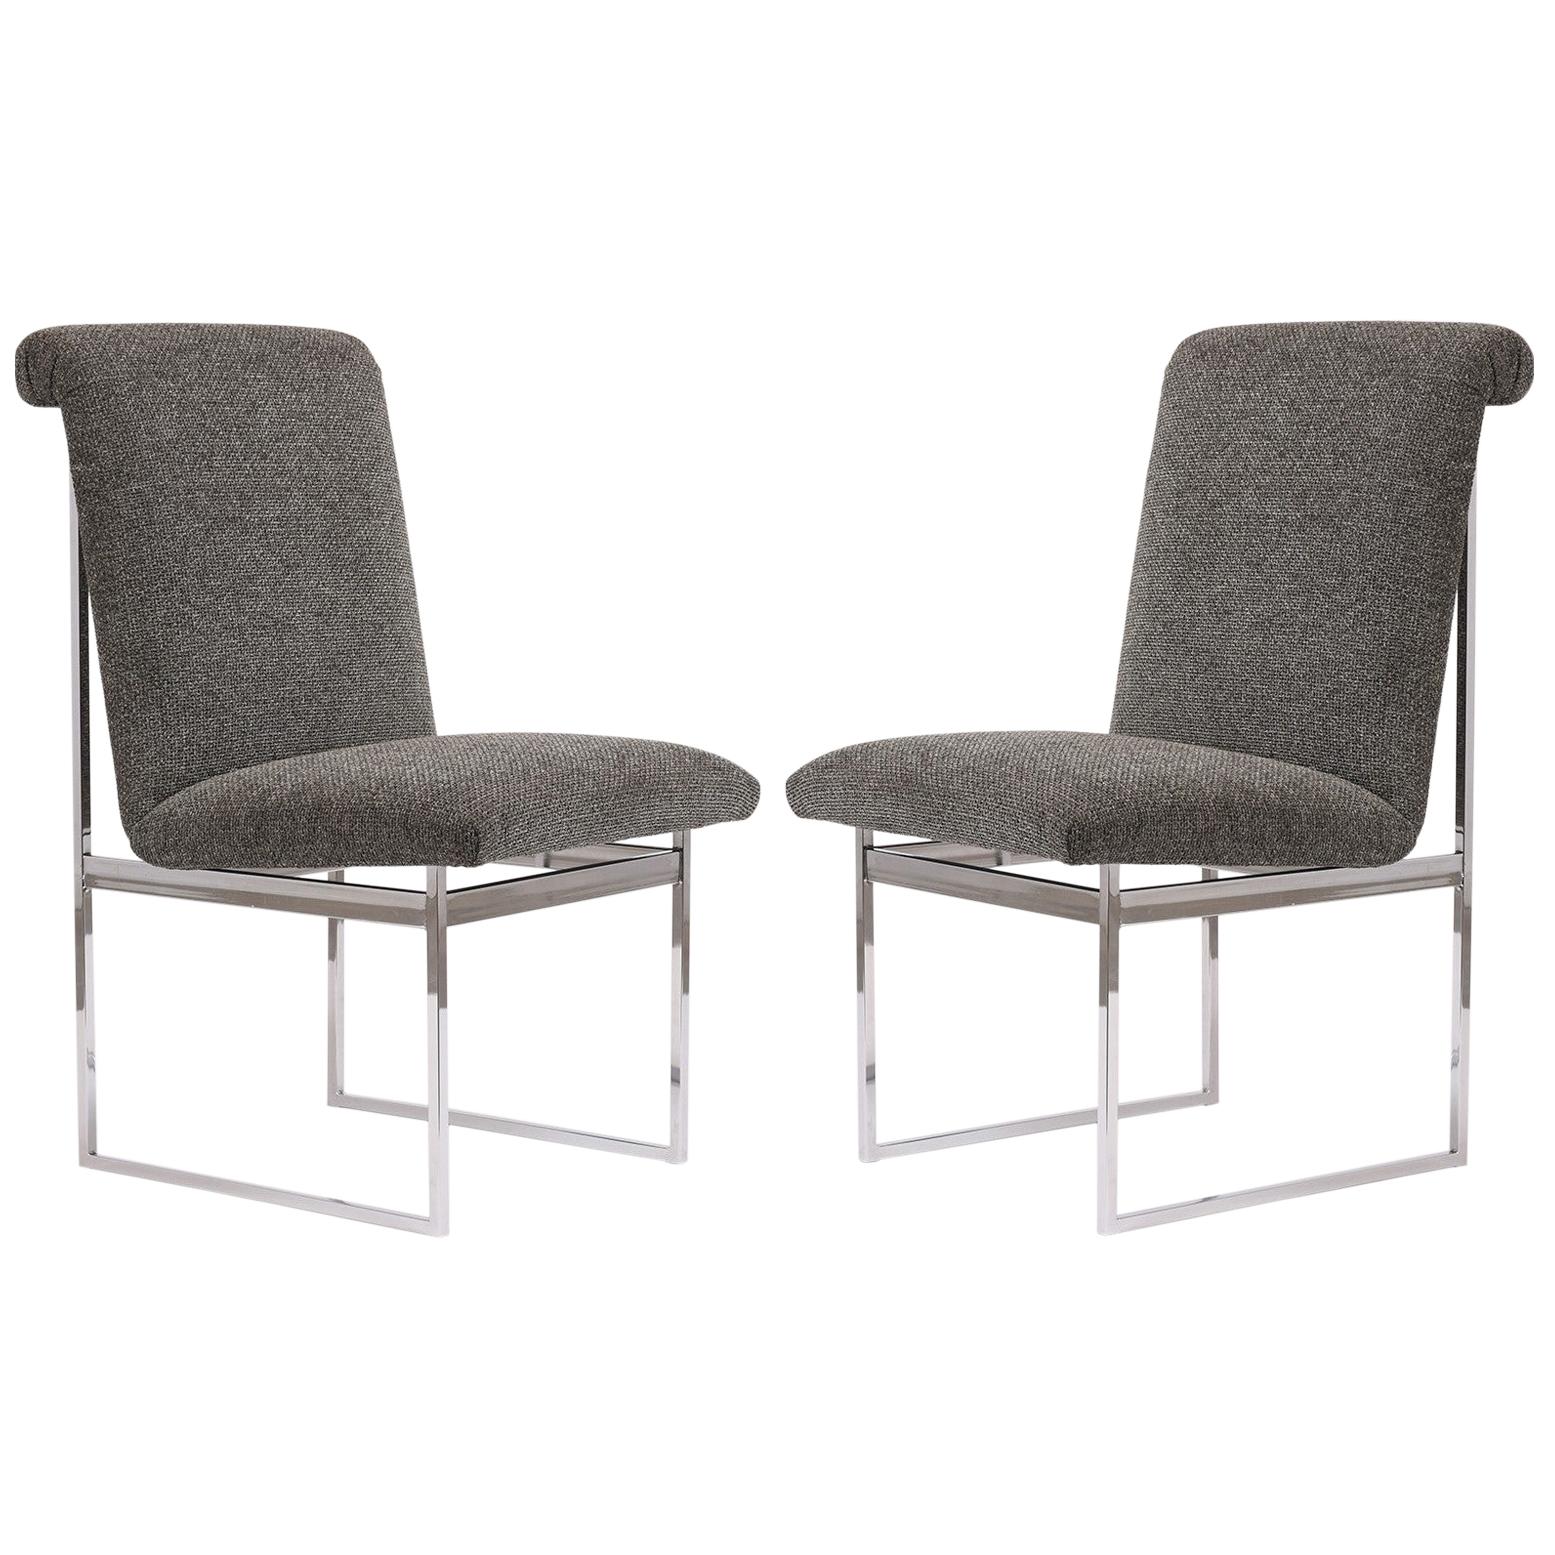 Pair of Milo Baughman Style Chrome Chairs